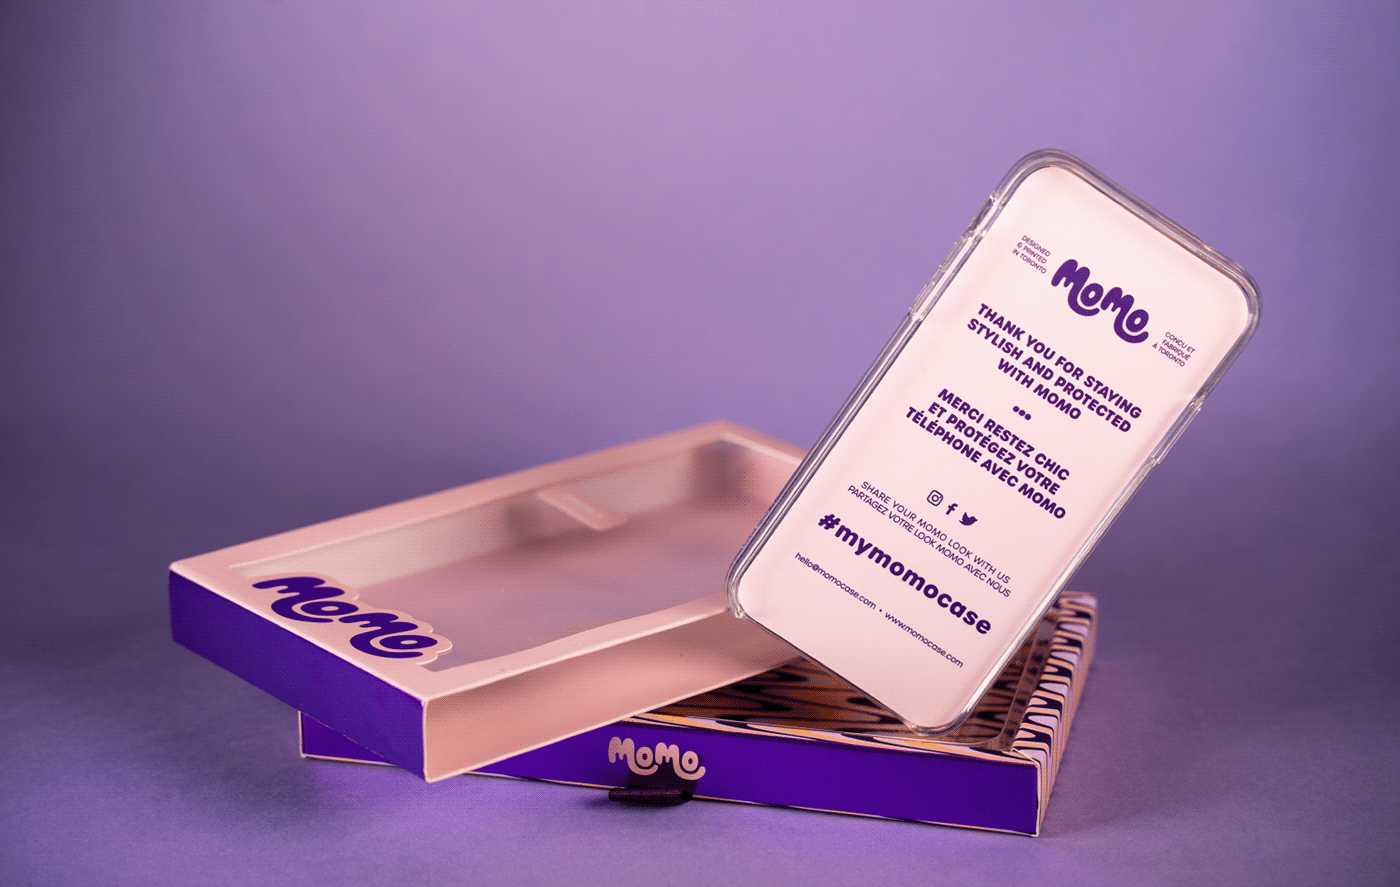 groovy 70s die cut Packaging phone case Patterns tech Accessory metallic foil